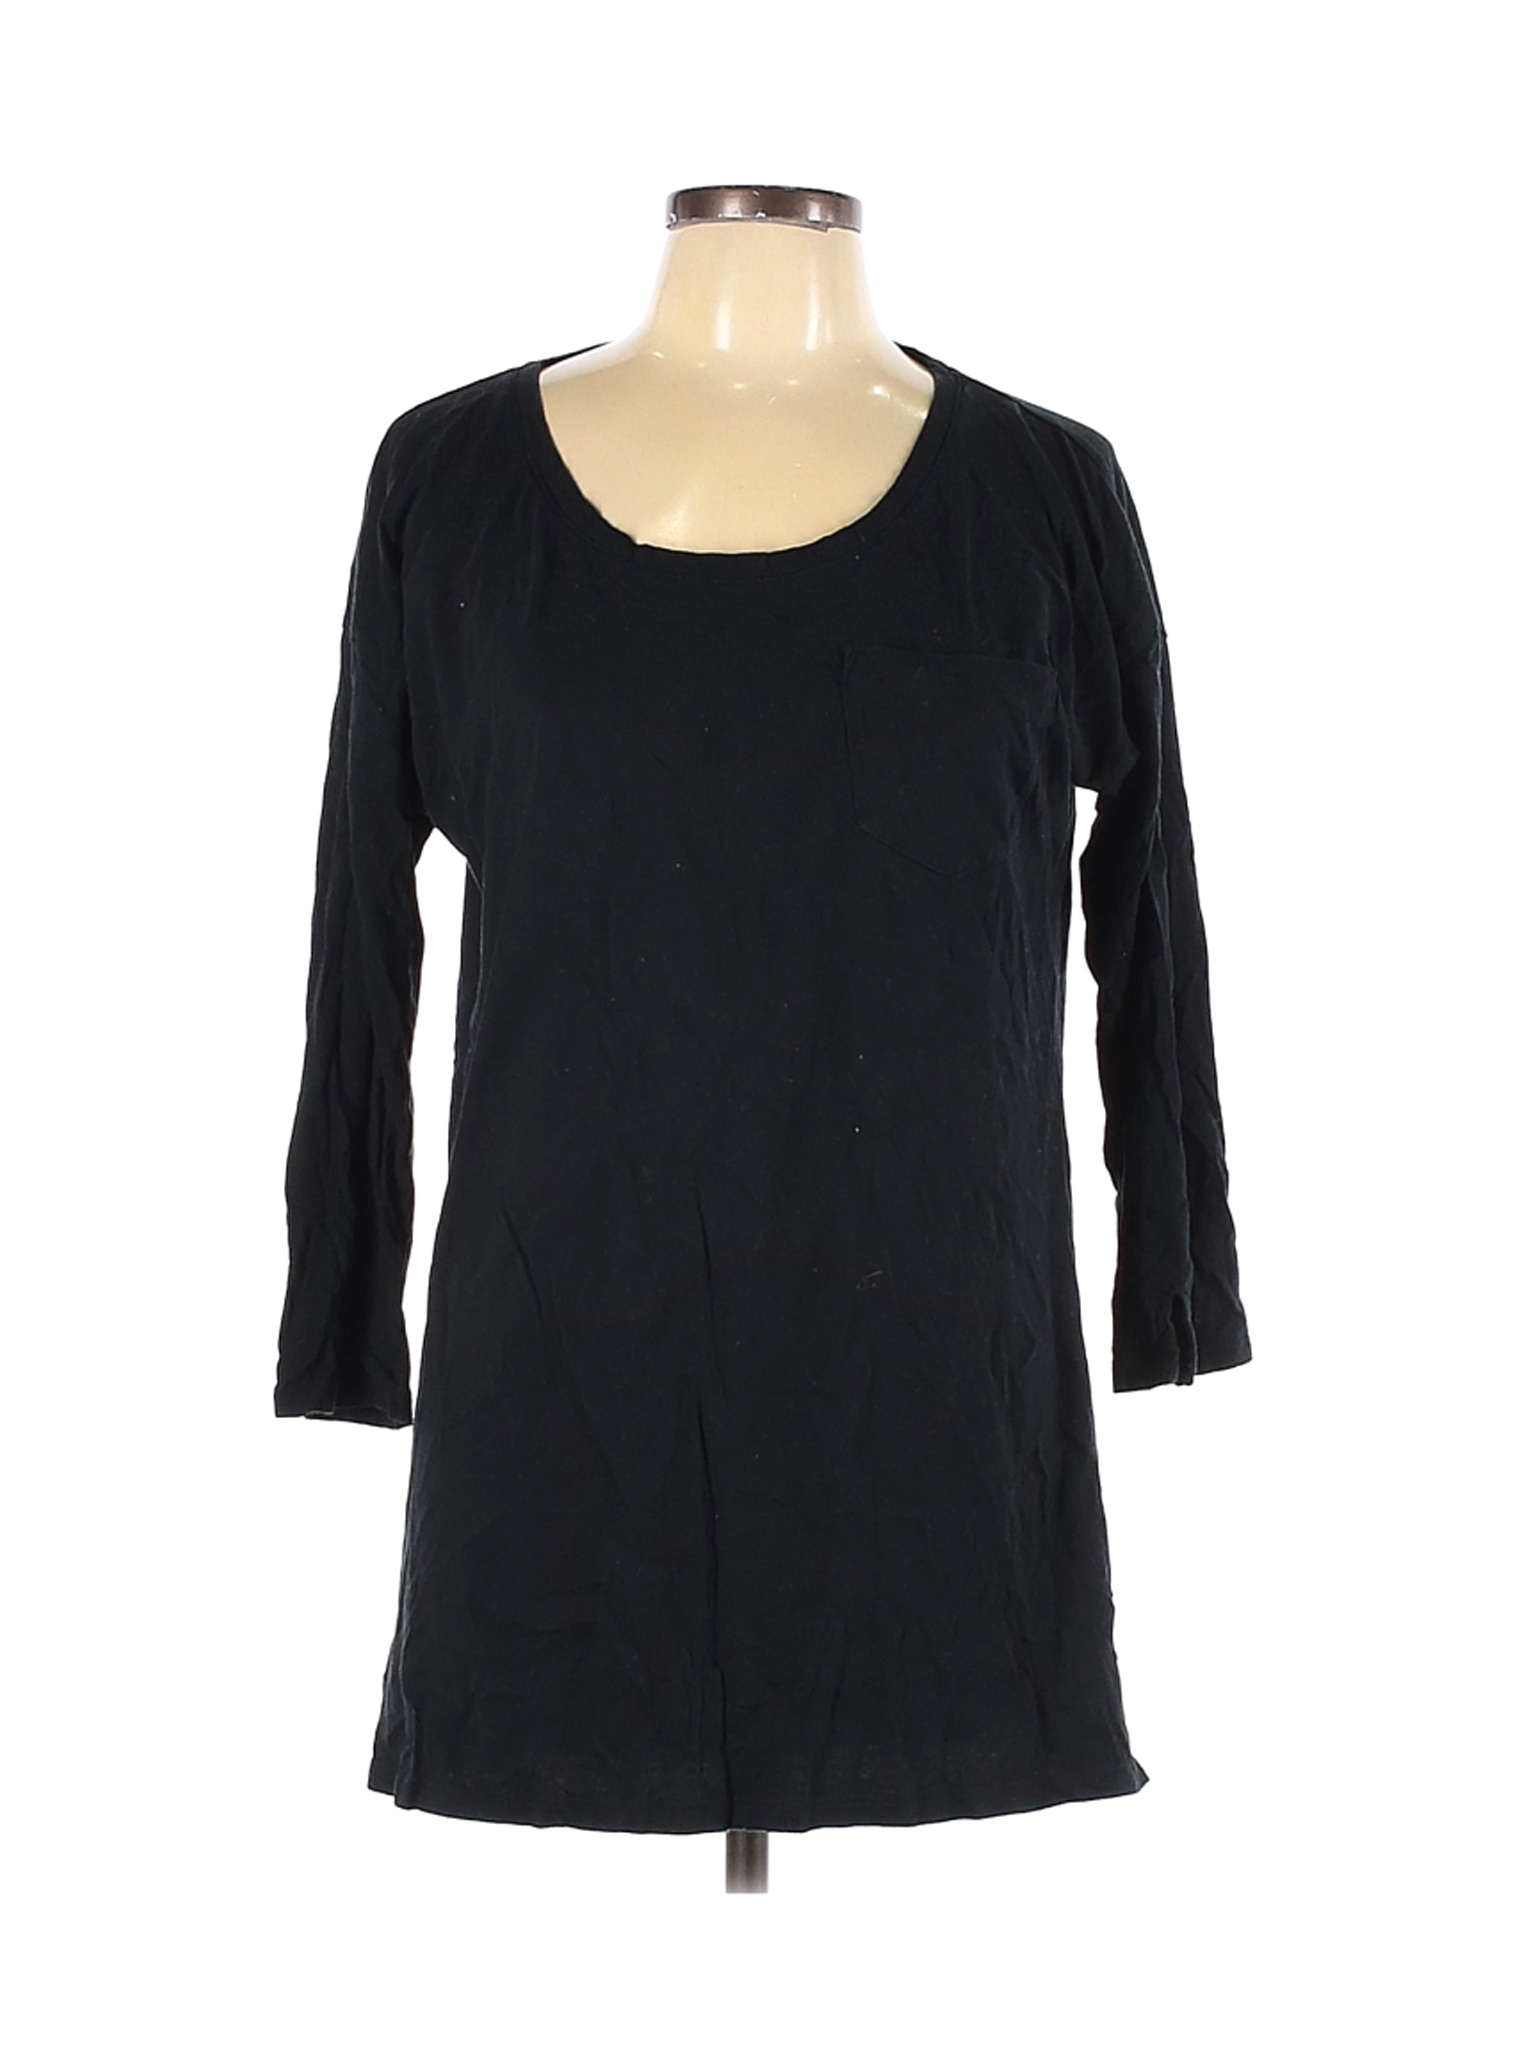 Gap Women Black Short Sleeve T-Shirt L | eBay